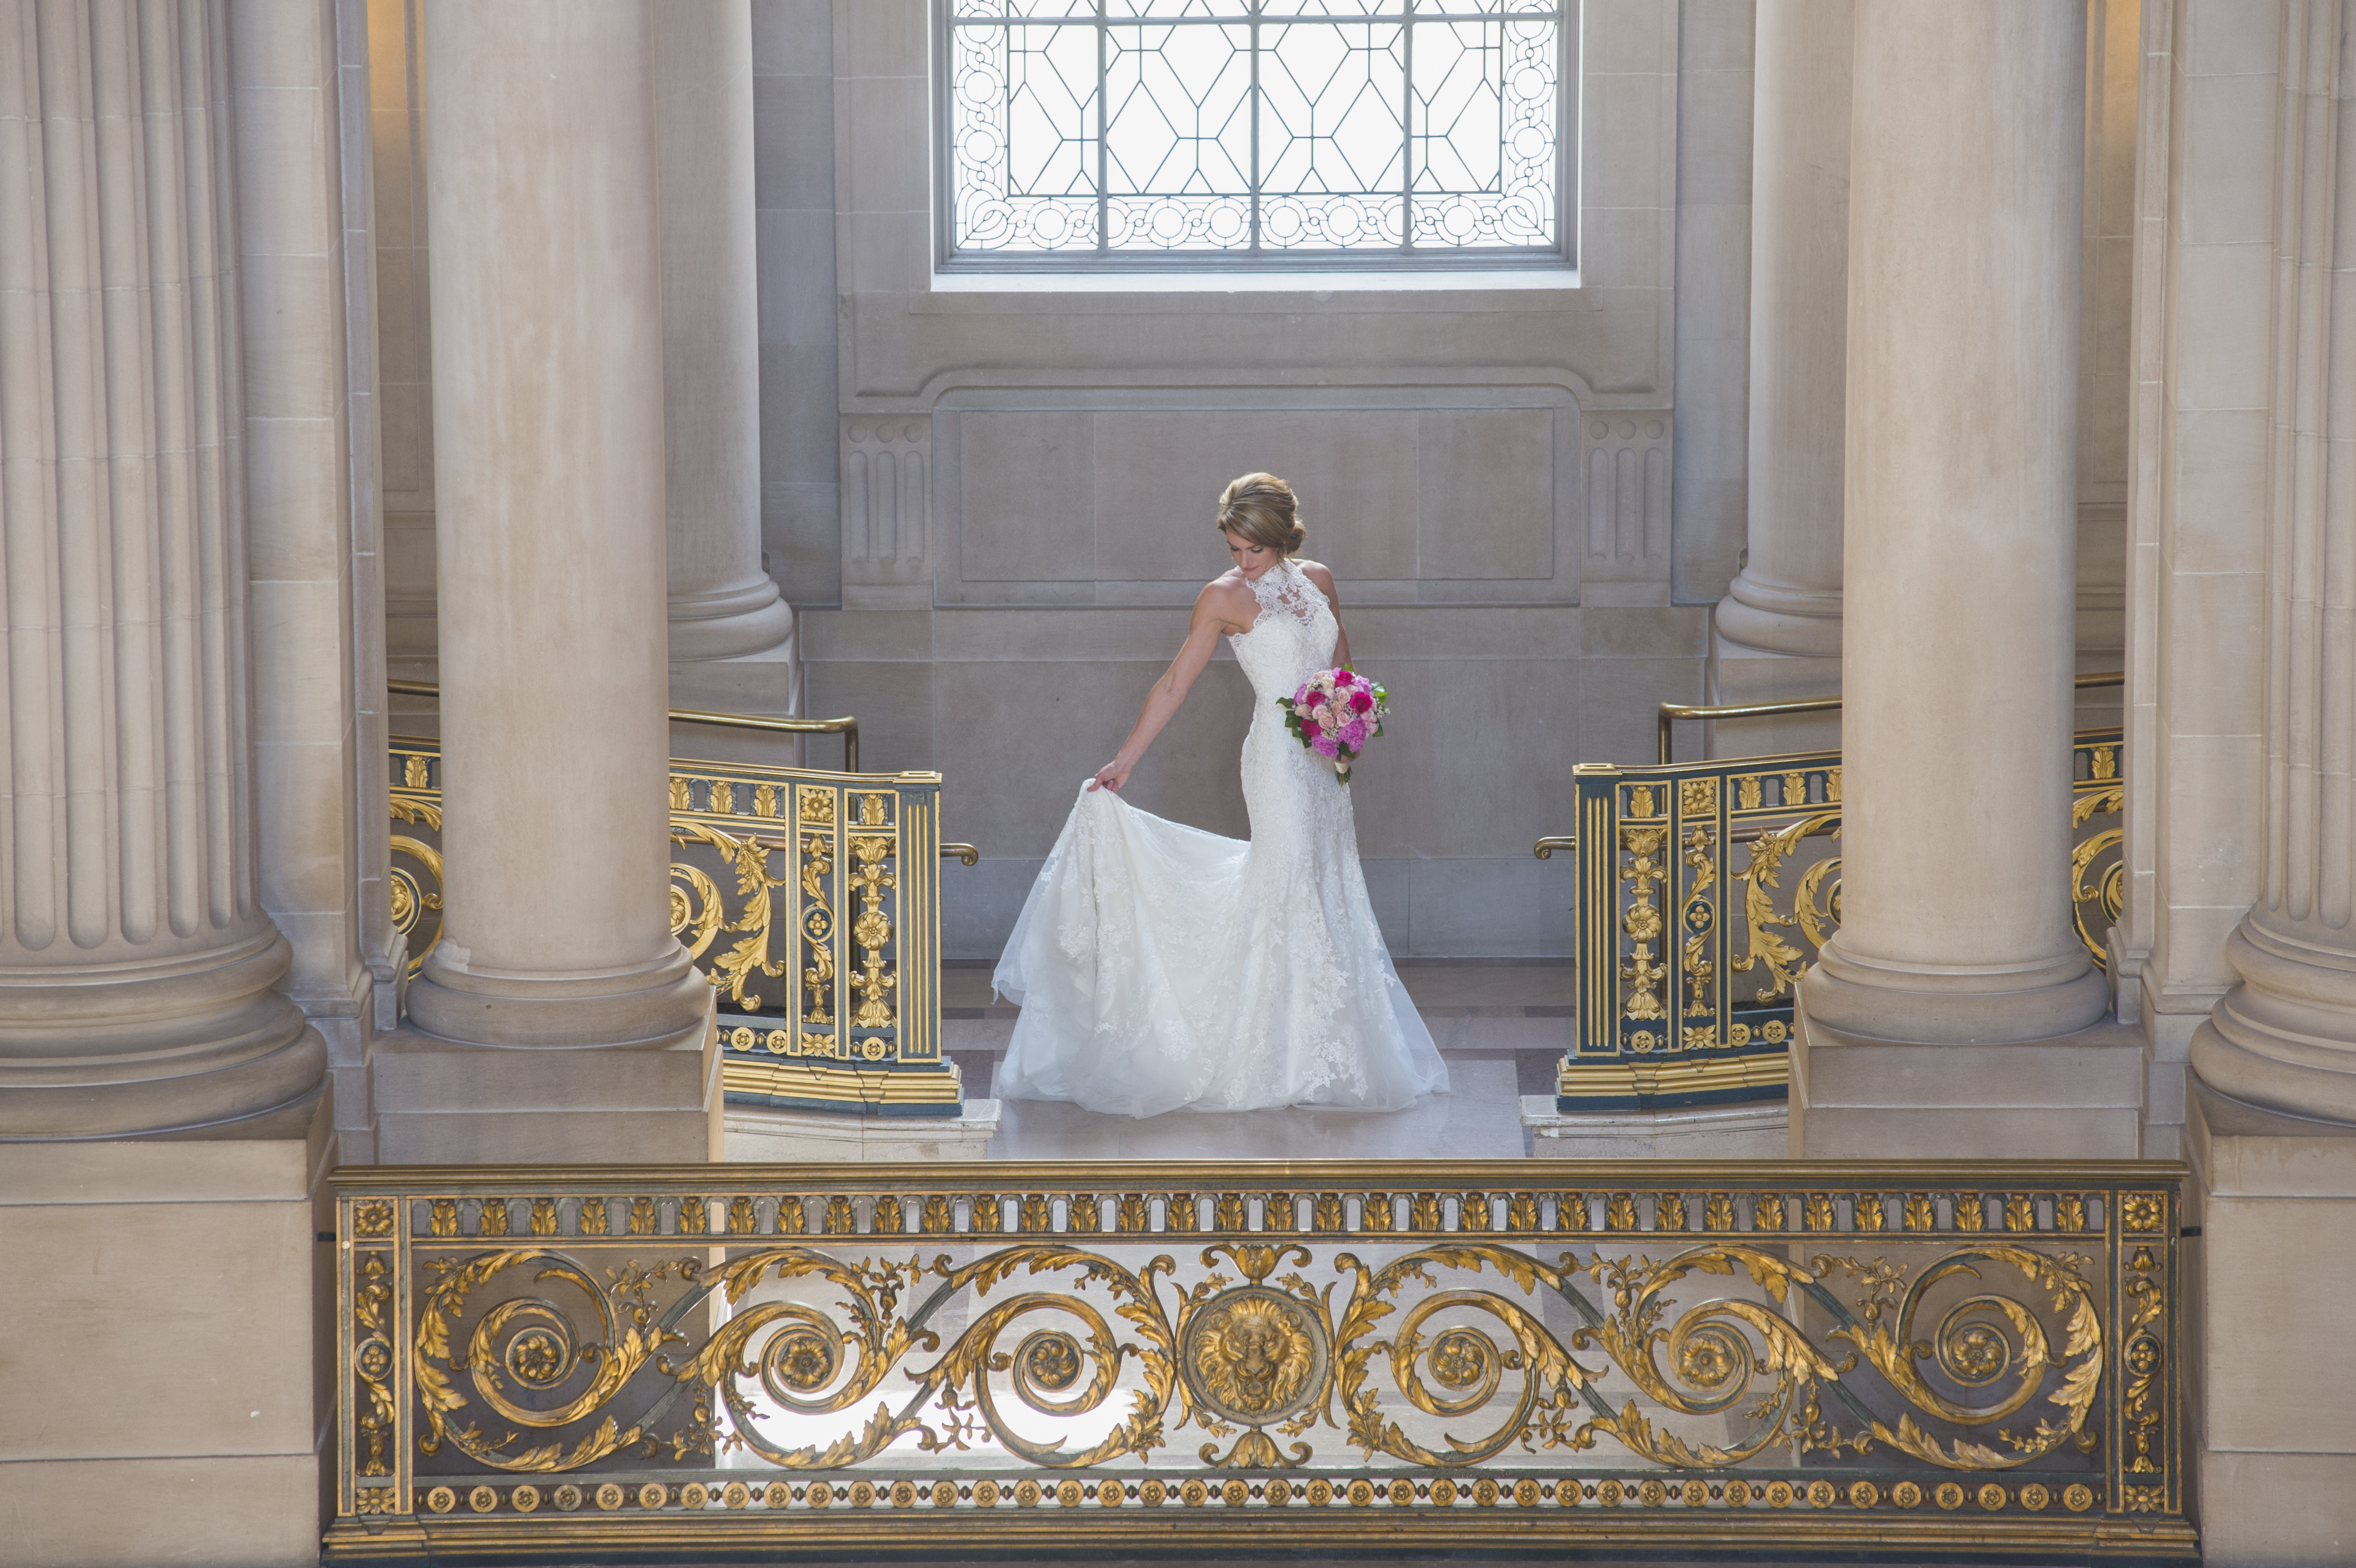 City Hall bride checks her wedding gown